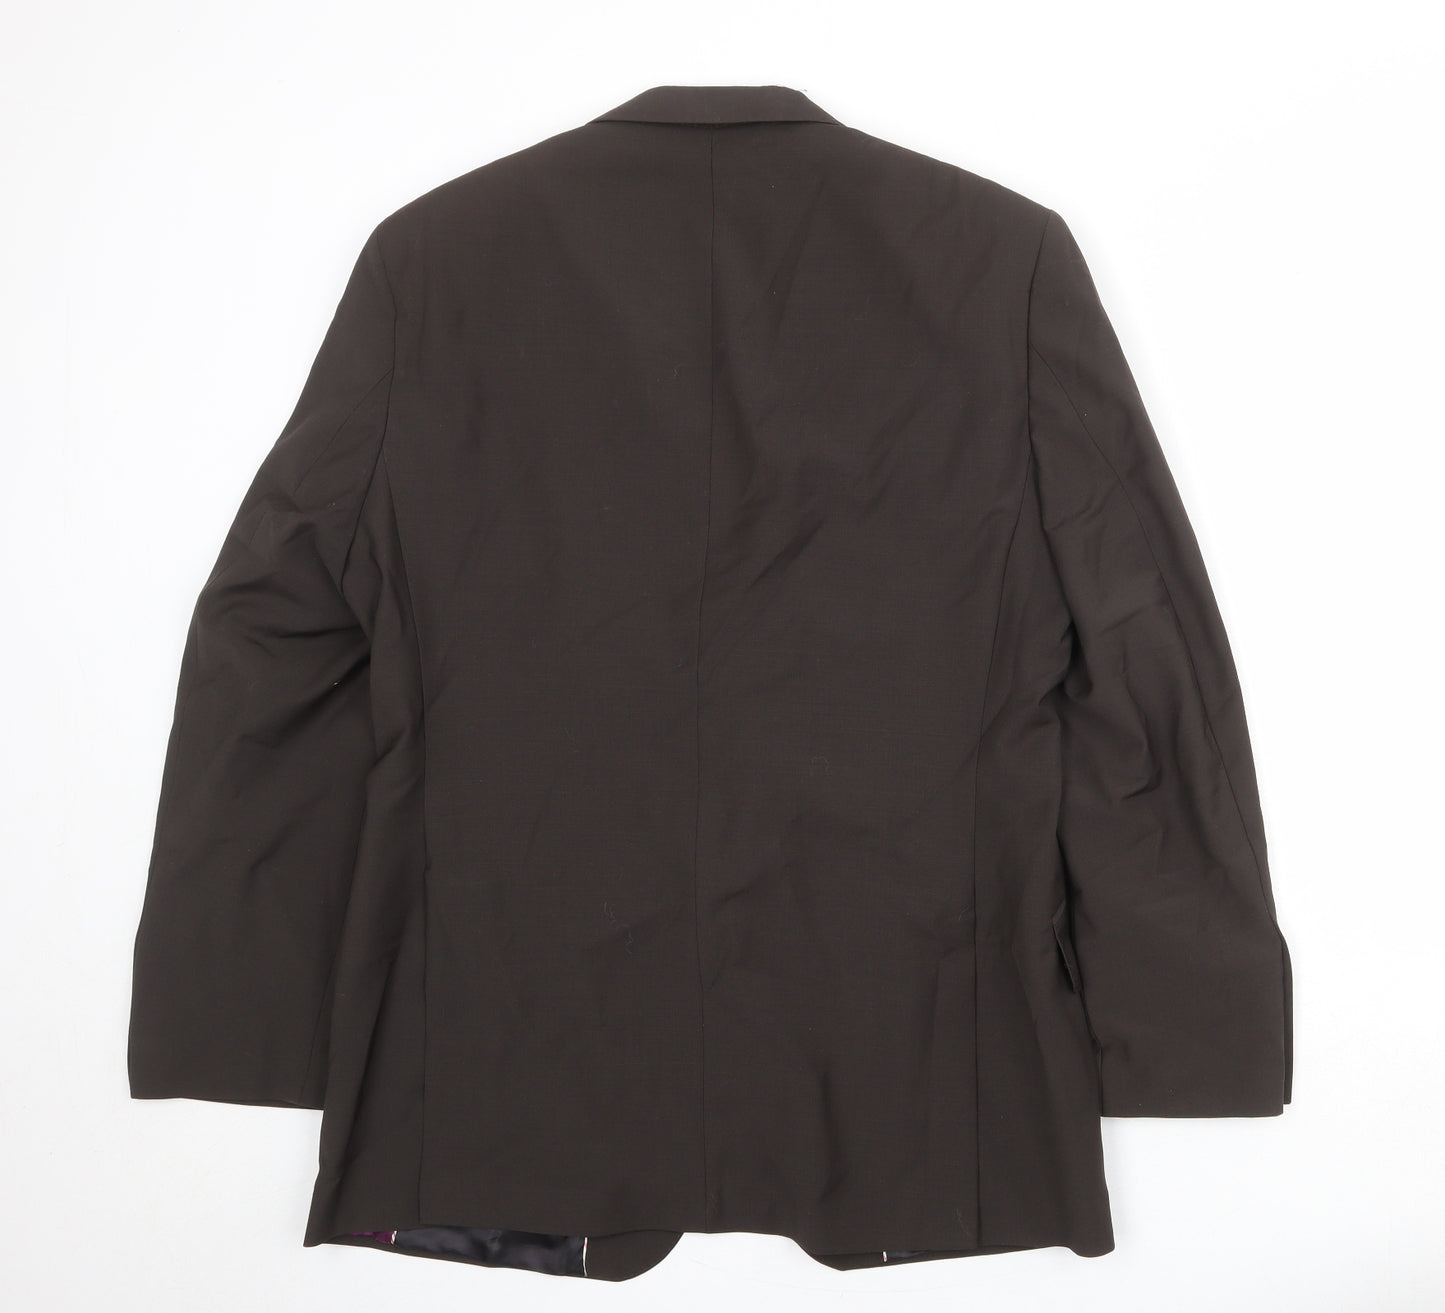 Autograph Mens Brown Wool Jacket Suit Jacket Size 40 Regular